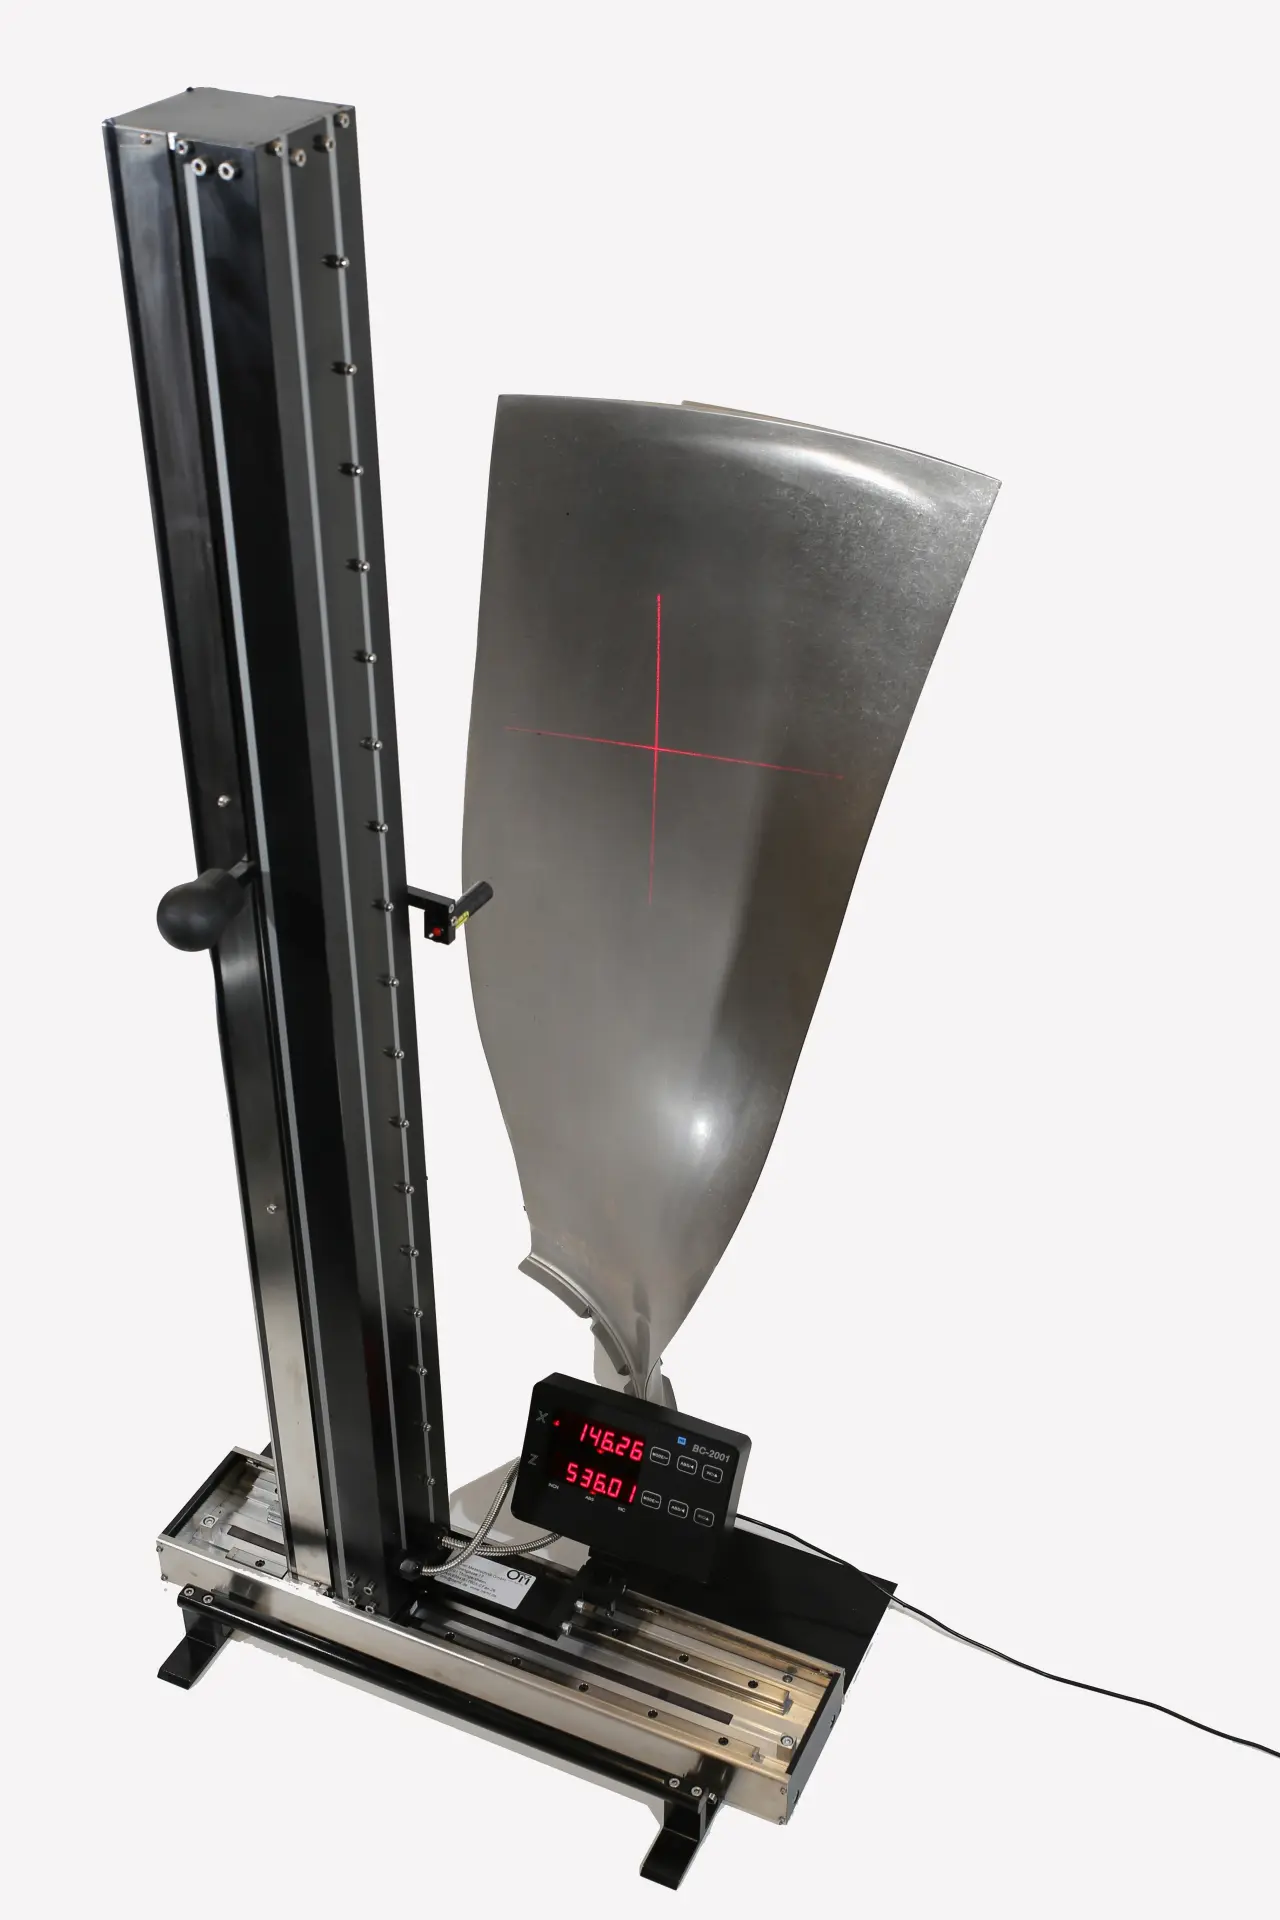 Self-designed height measuring device